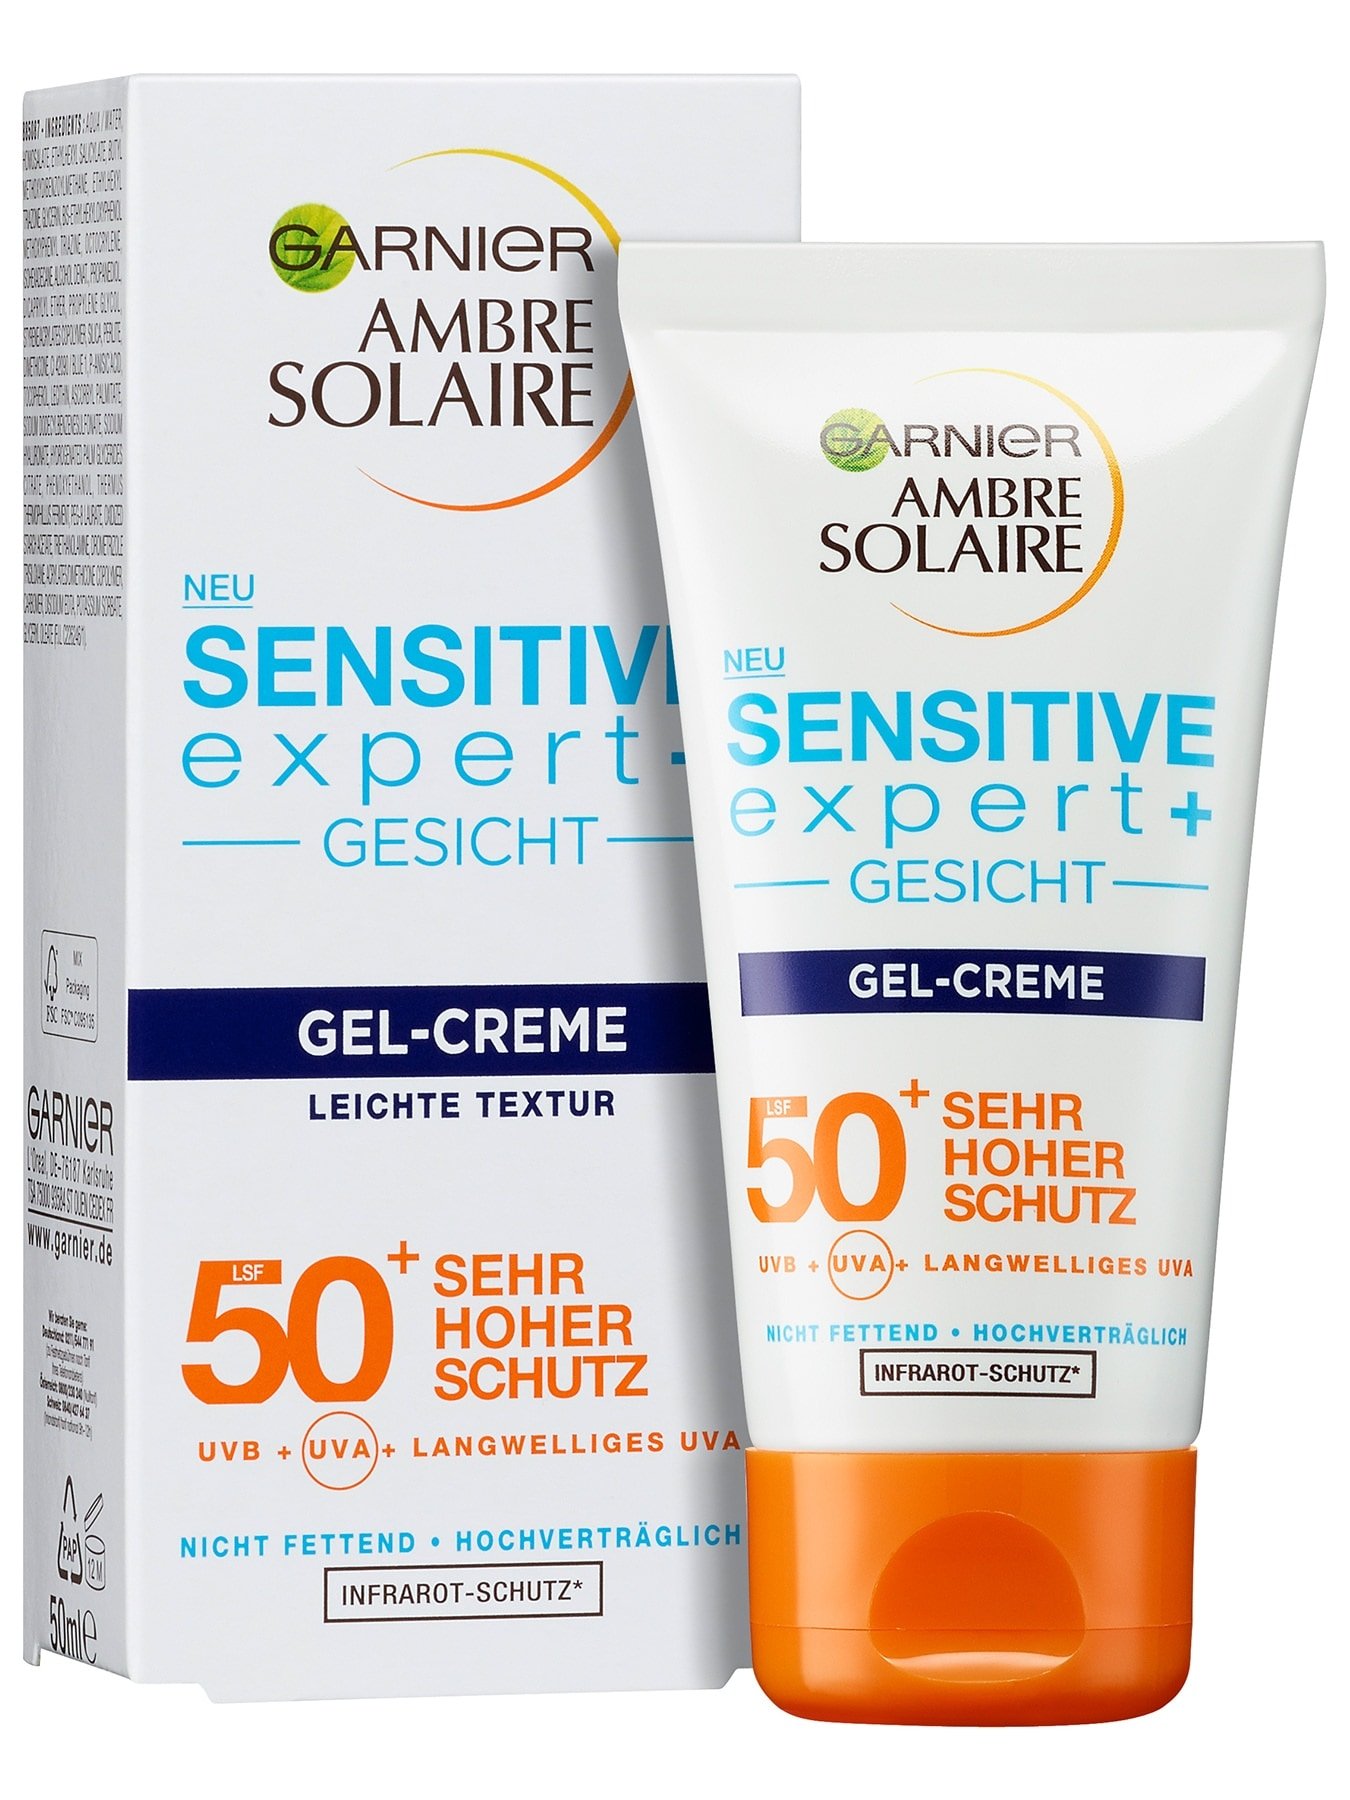 Ambre Solaire Sensitive expert+ Gesicht Gel-Creme LSF 50+ - Produkt & Verpackung